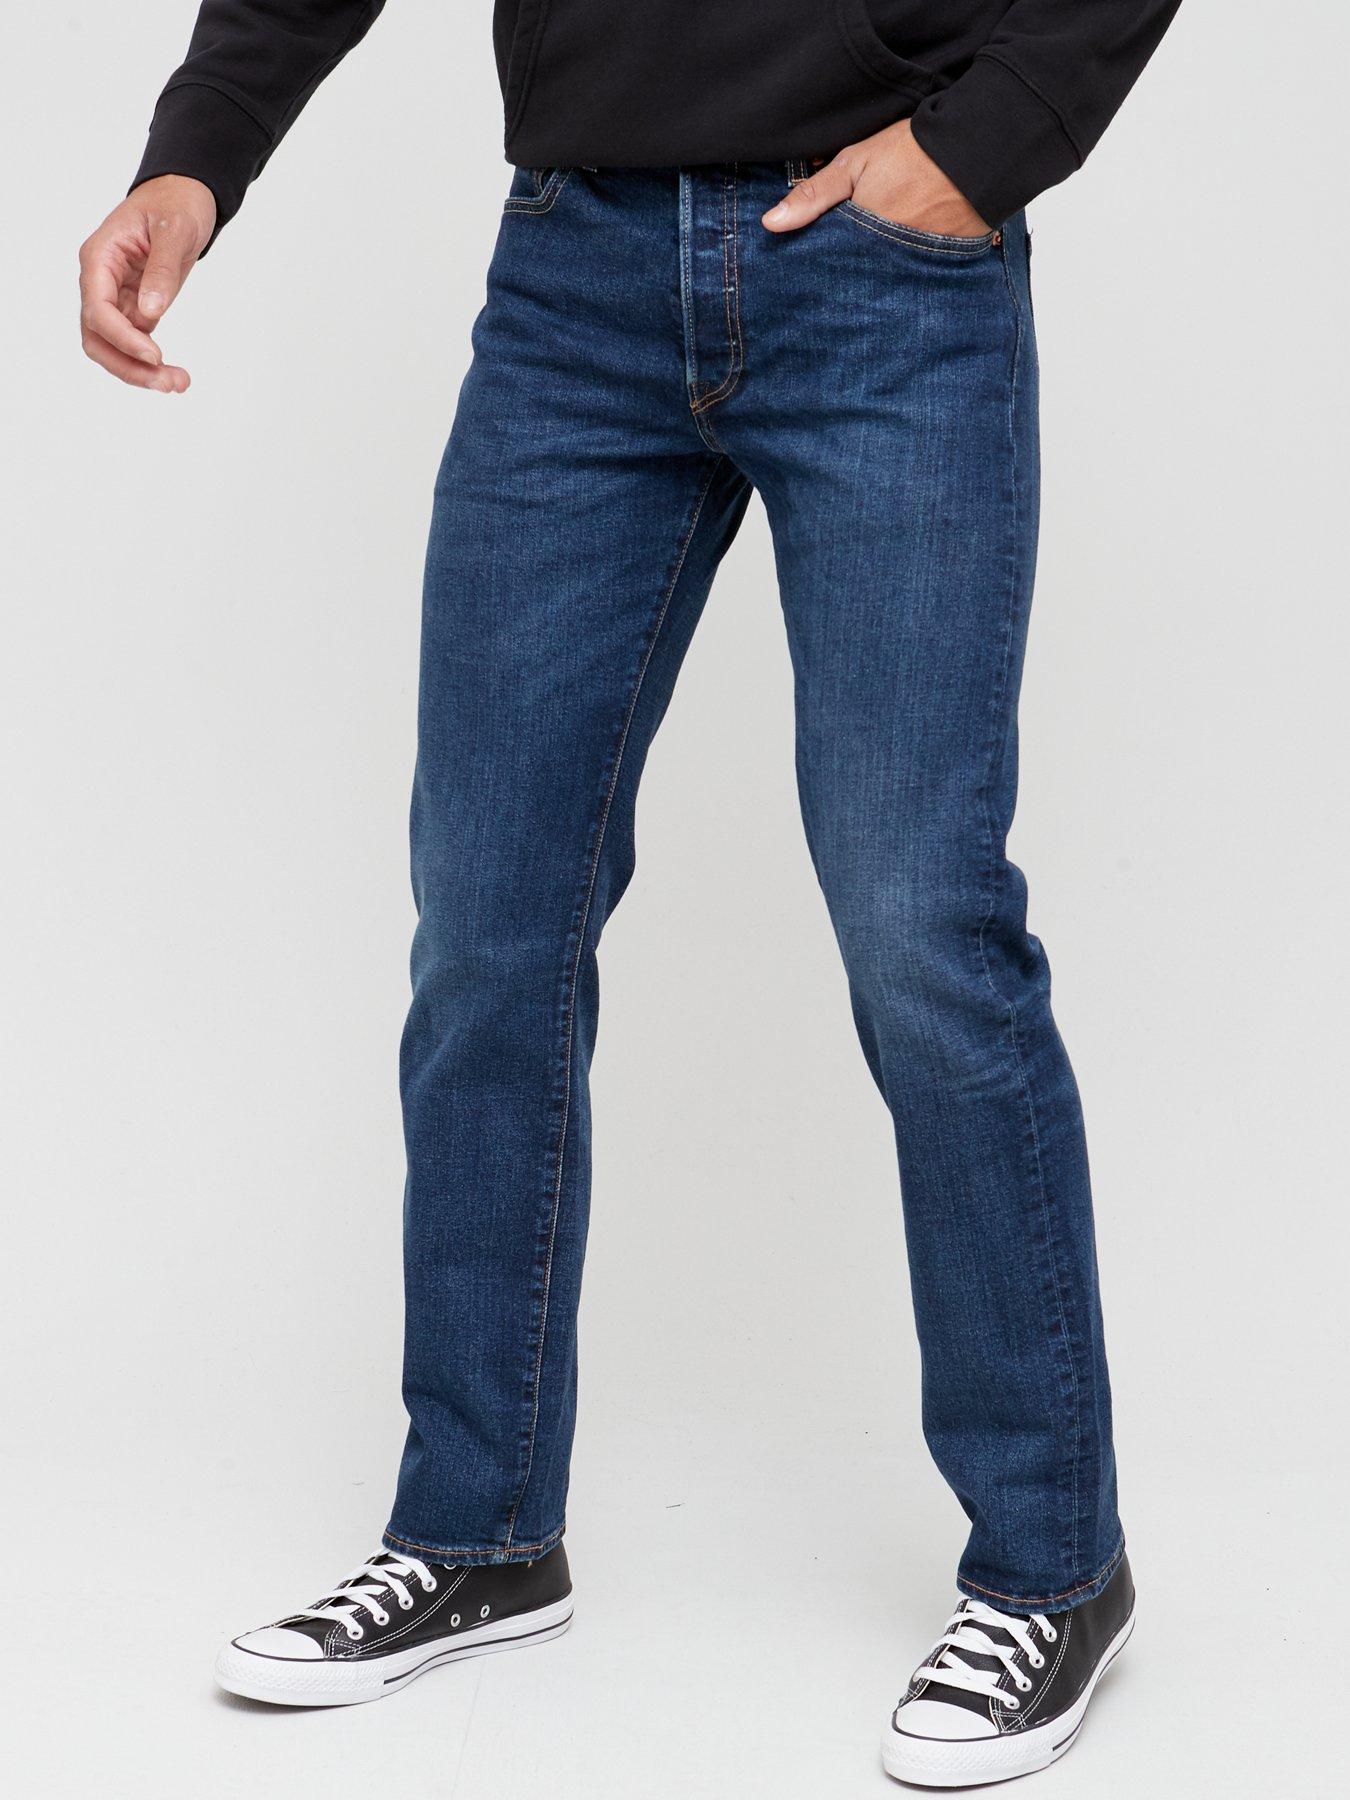 Blue 42                  EU discount 82% Levi's straight jeans MEN FASHION Jeans Worn-in 